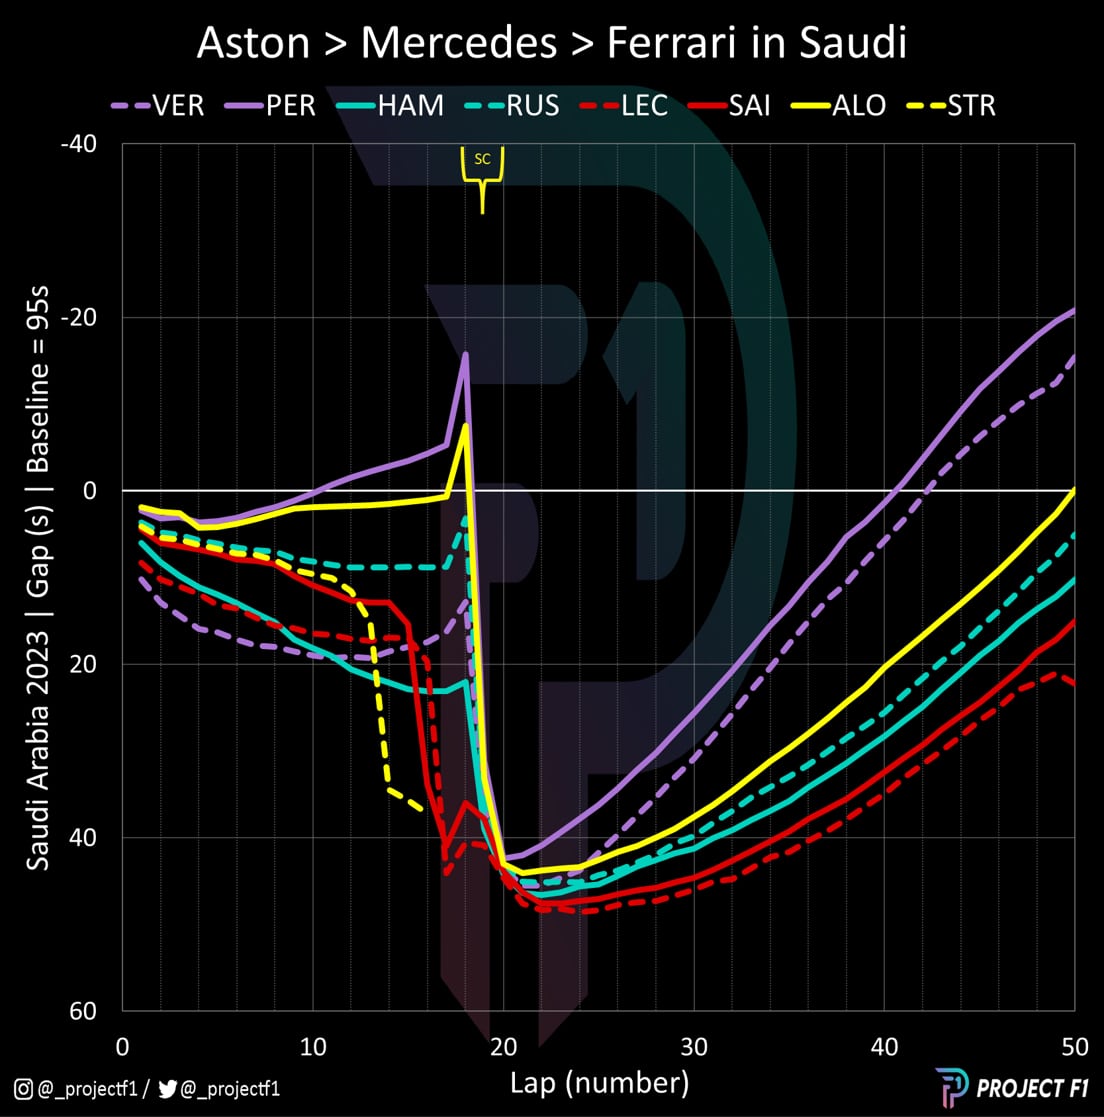 Aston Mercedes ferrari performance comparison